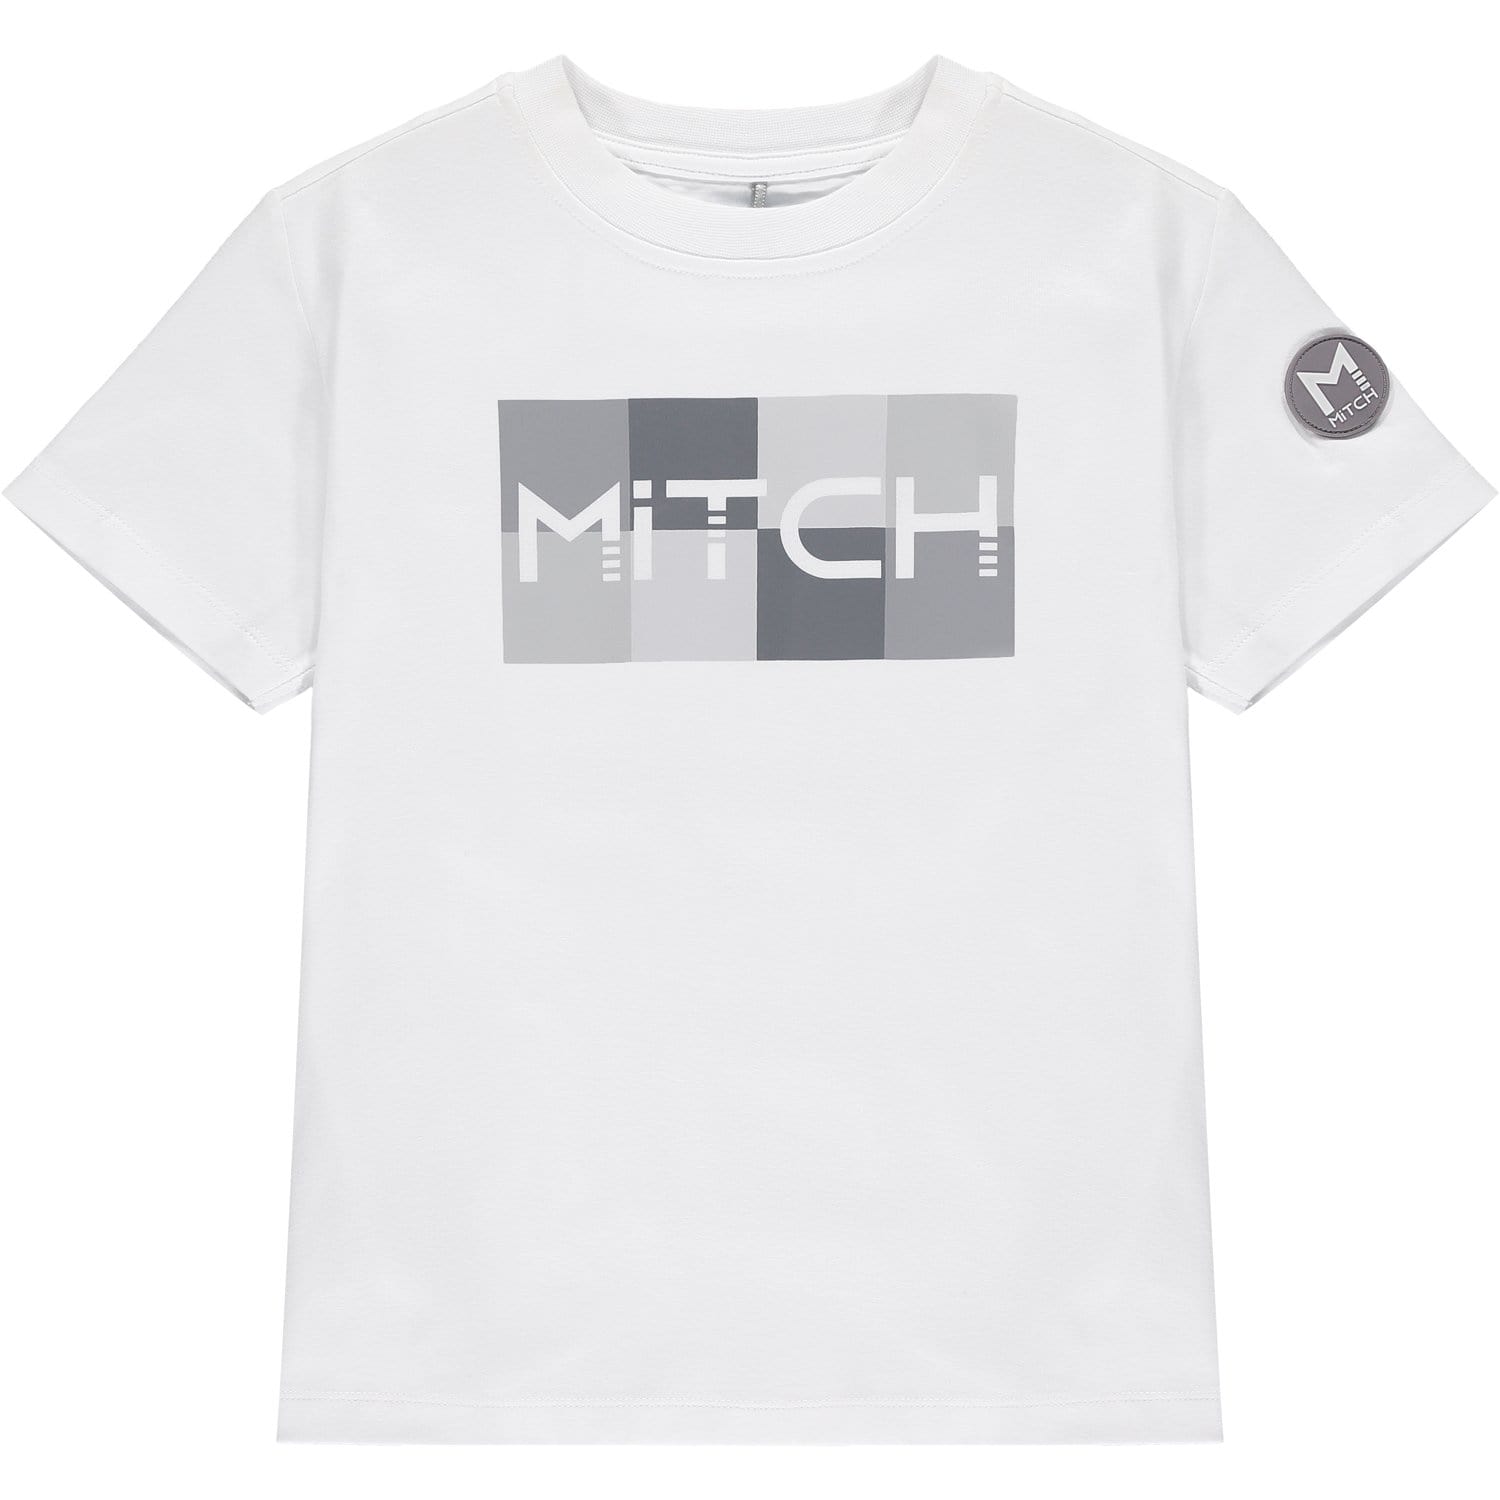 MITCH - Pennsylvania Square T Shirt - White